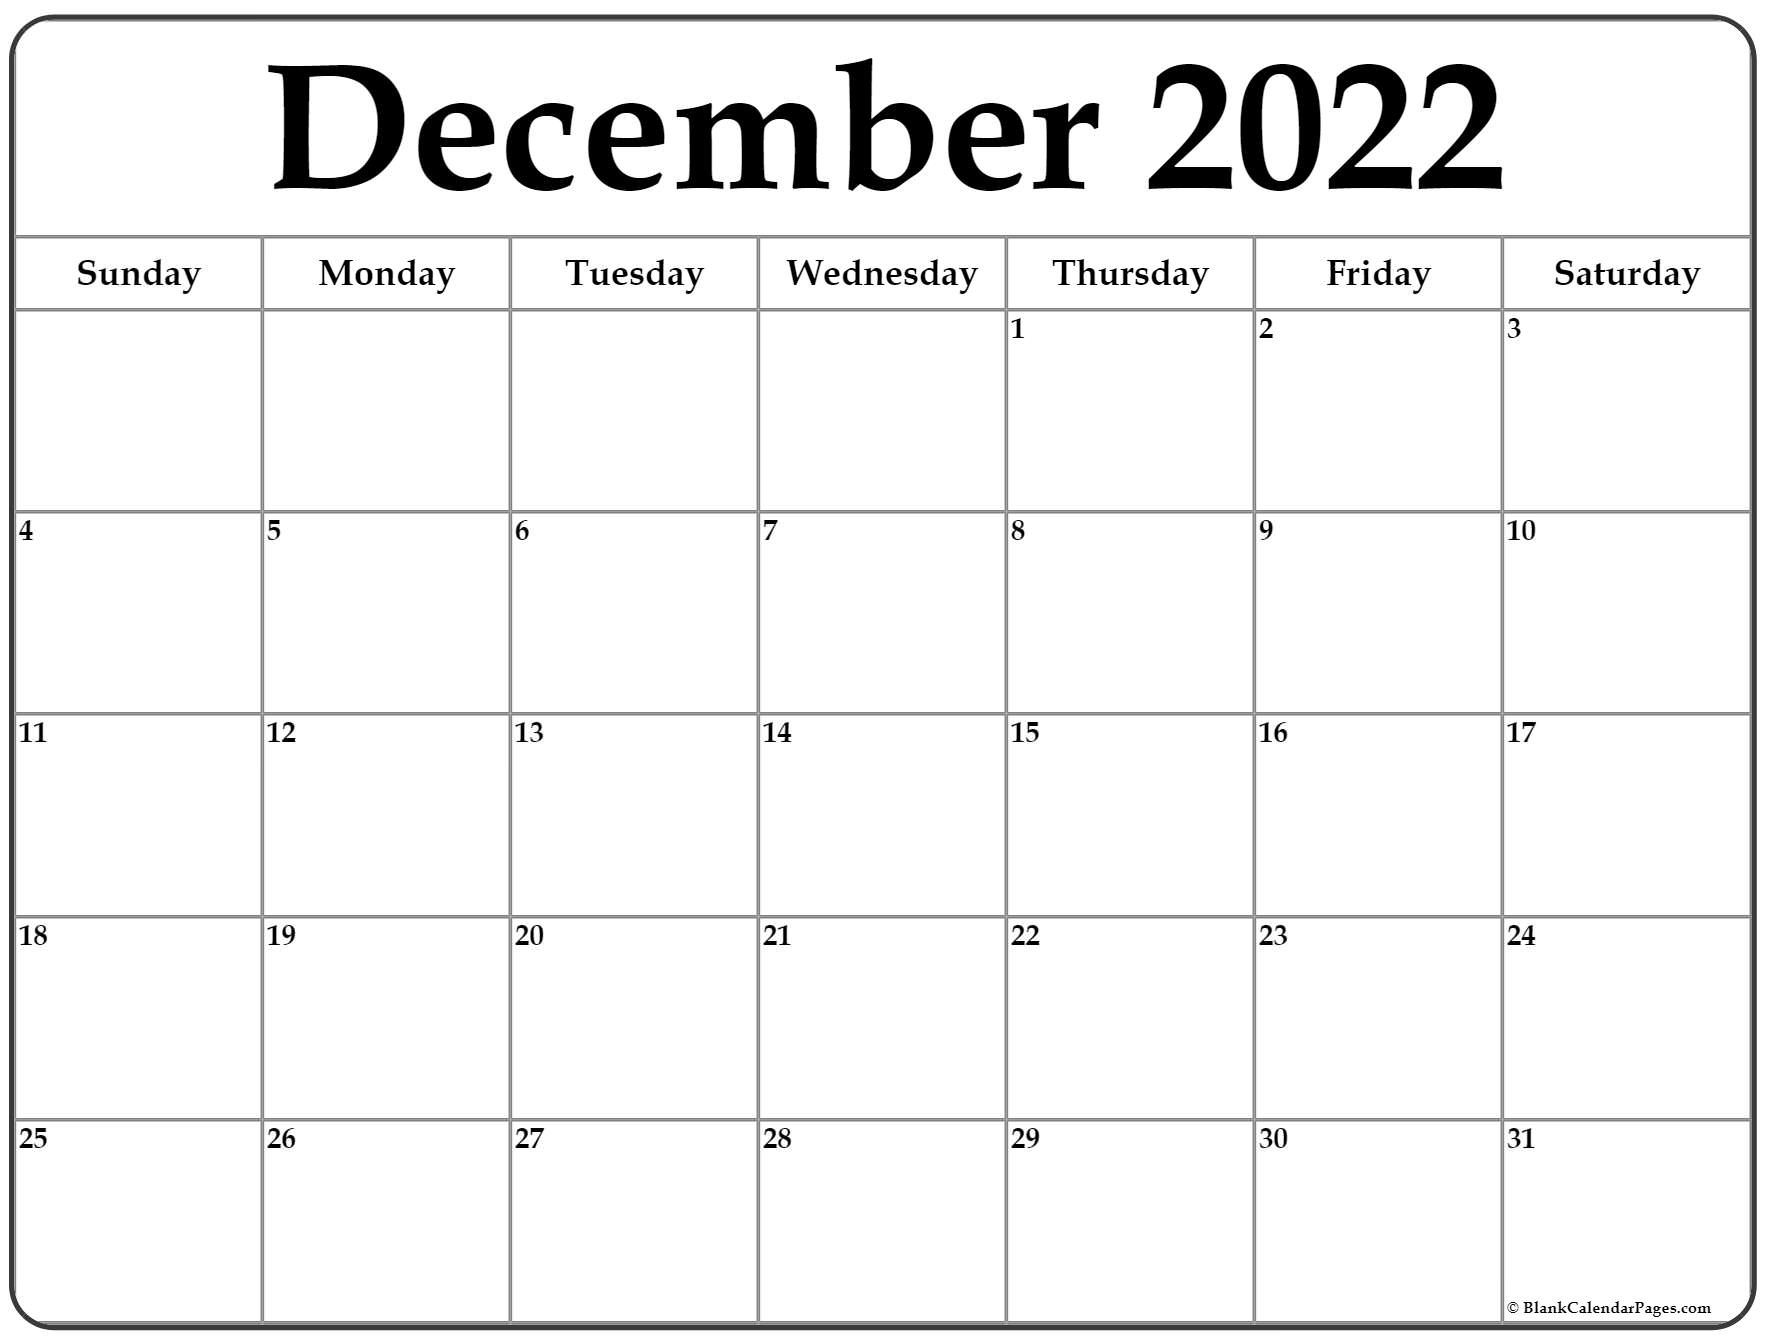 December 2022 Calendar | Free Printable Calendar Templates